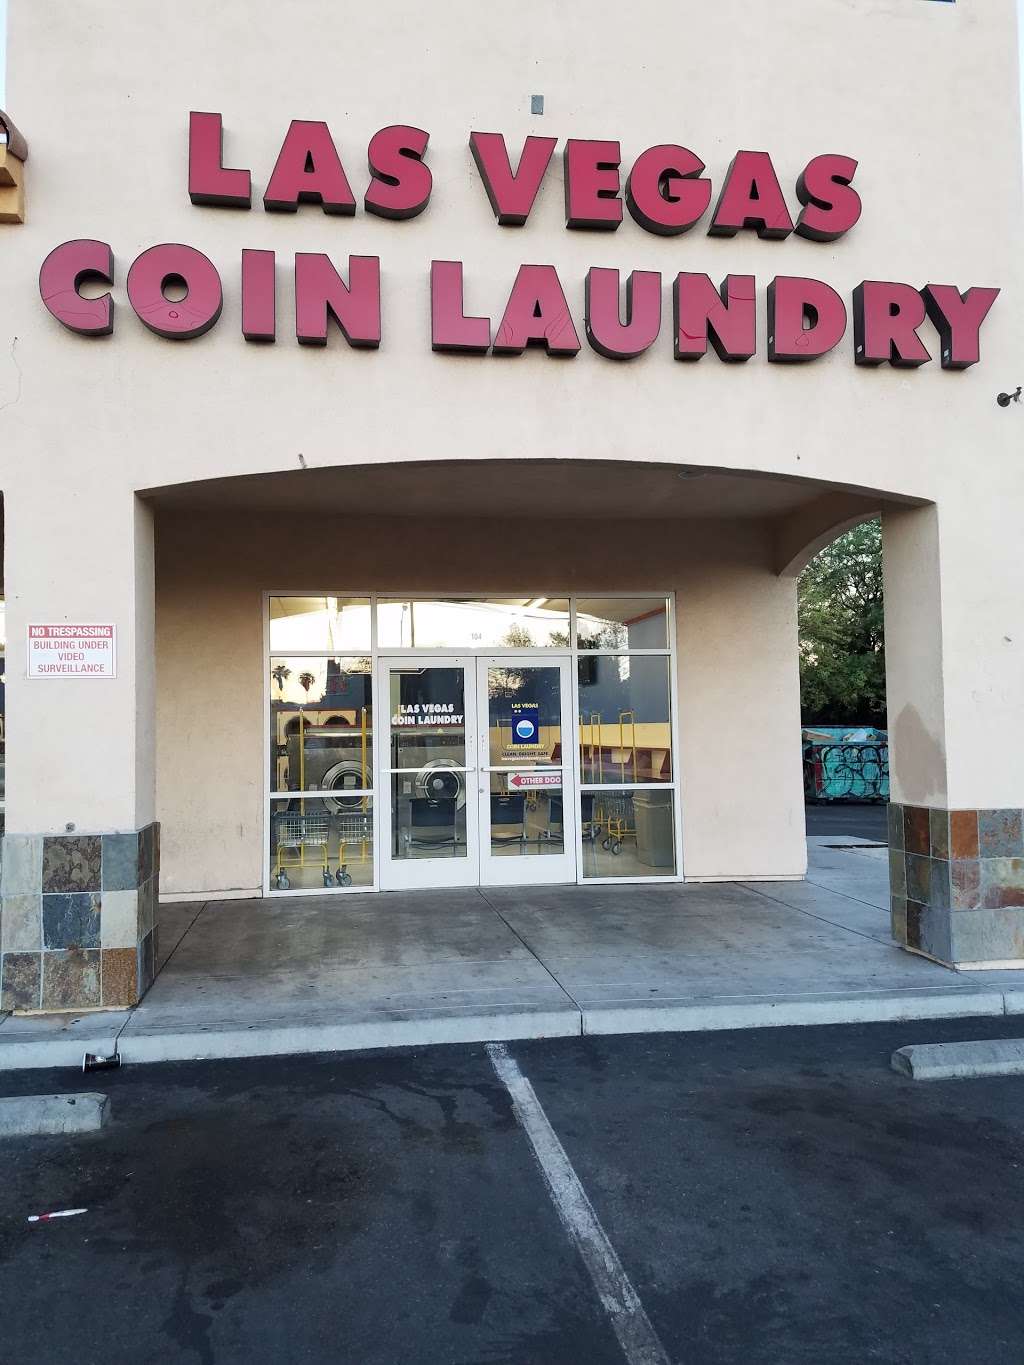 Las Vegas Coin Laundry #1 | 3860 S Nellis Blvd #103, Las Vegas, NV 89121 | Phone: (702) 434-5708